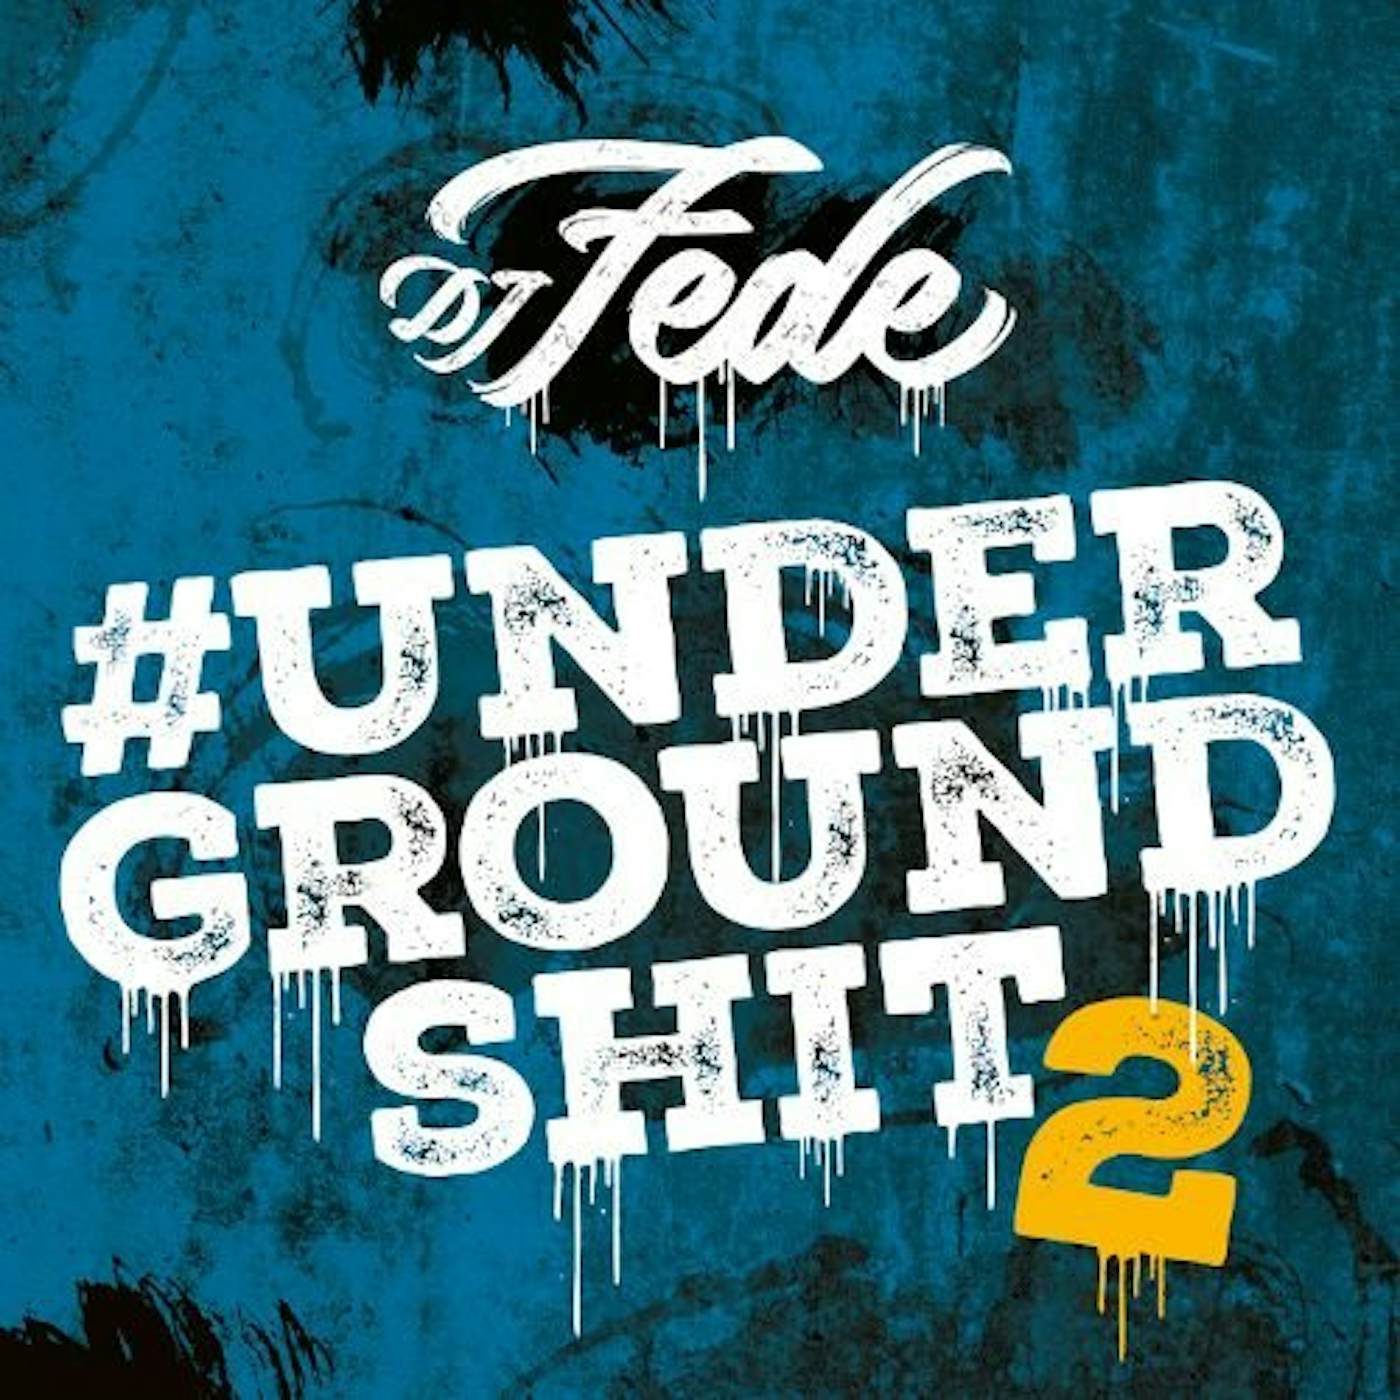 DJ Fede UNDERGROUND SHIT VOL 2 Vinyl Record